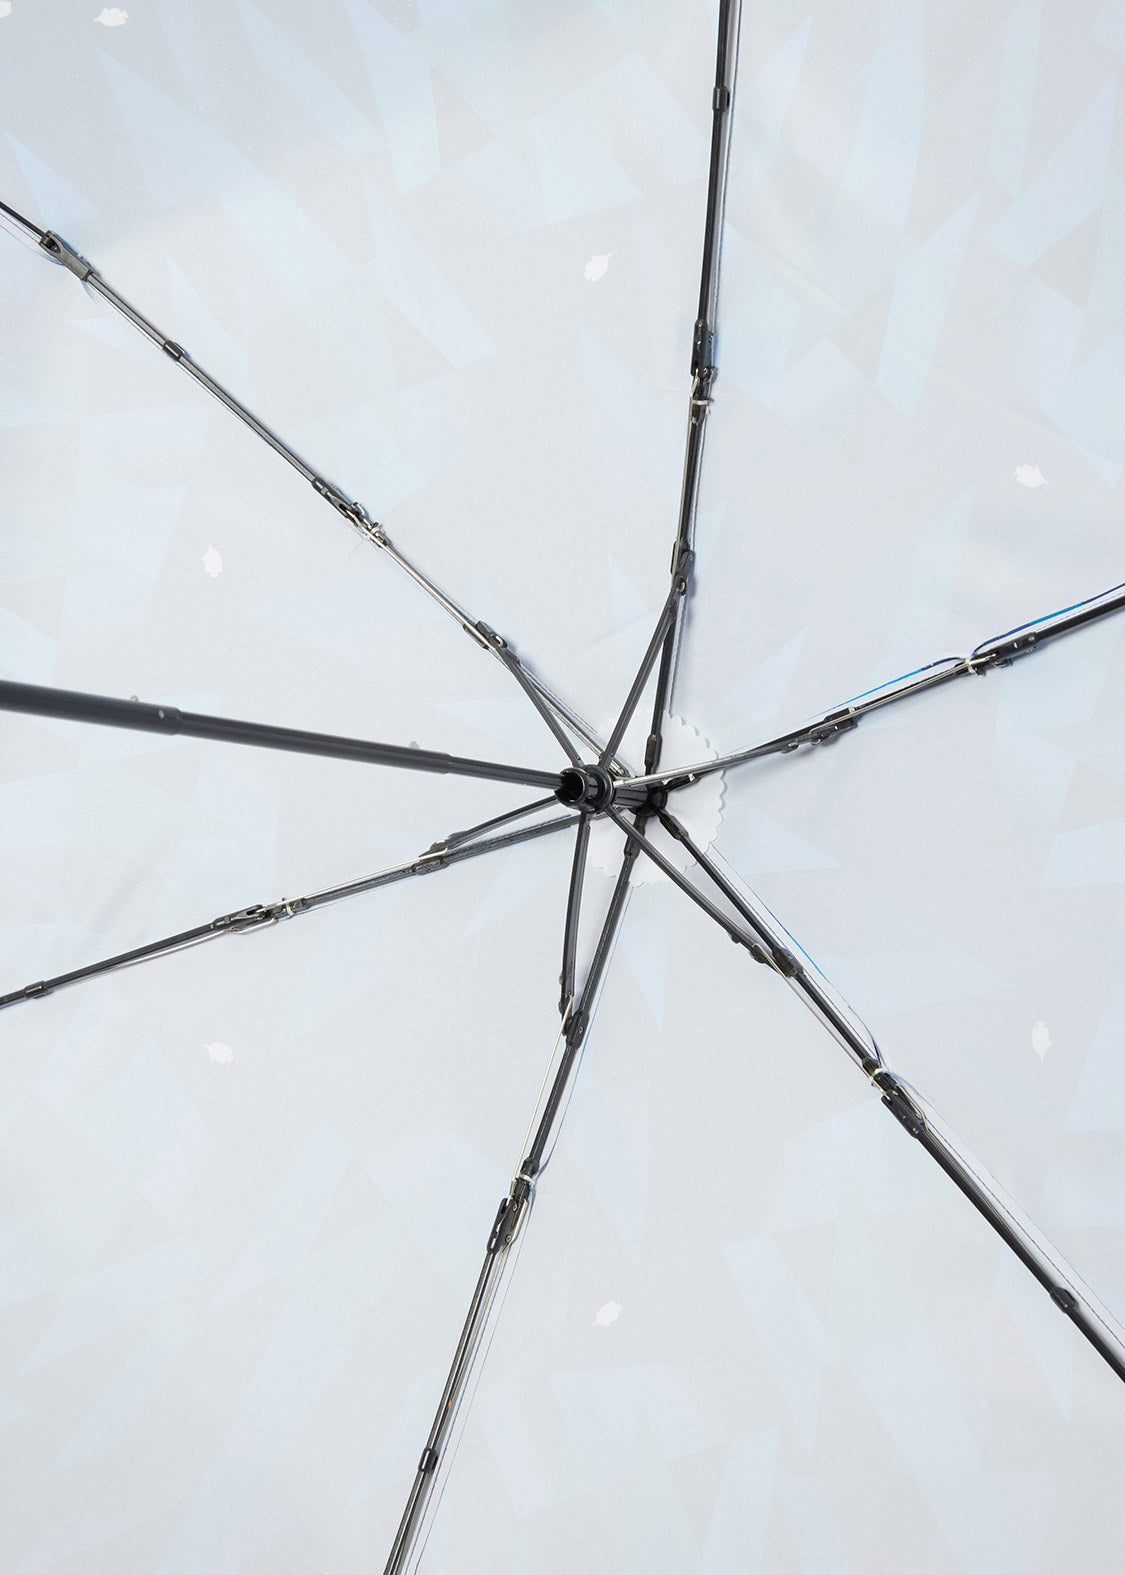 Foldable Umbrella (Starry Night)